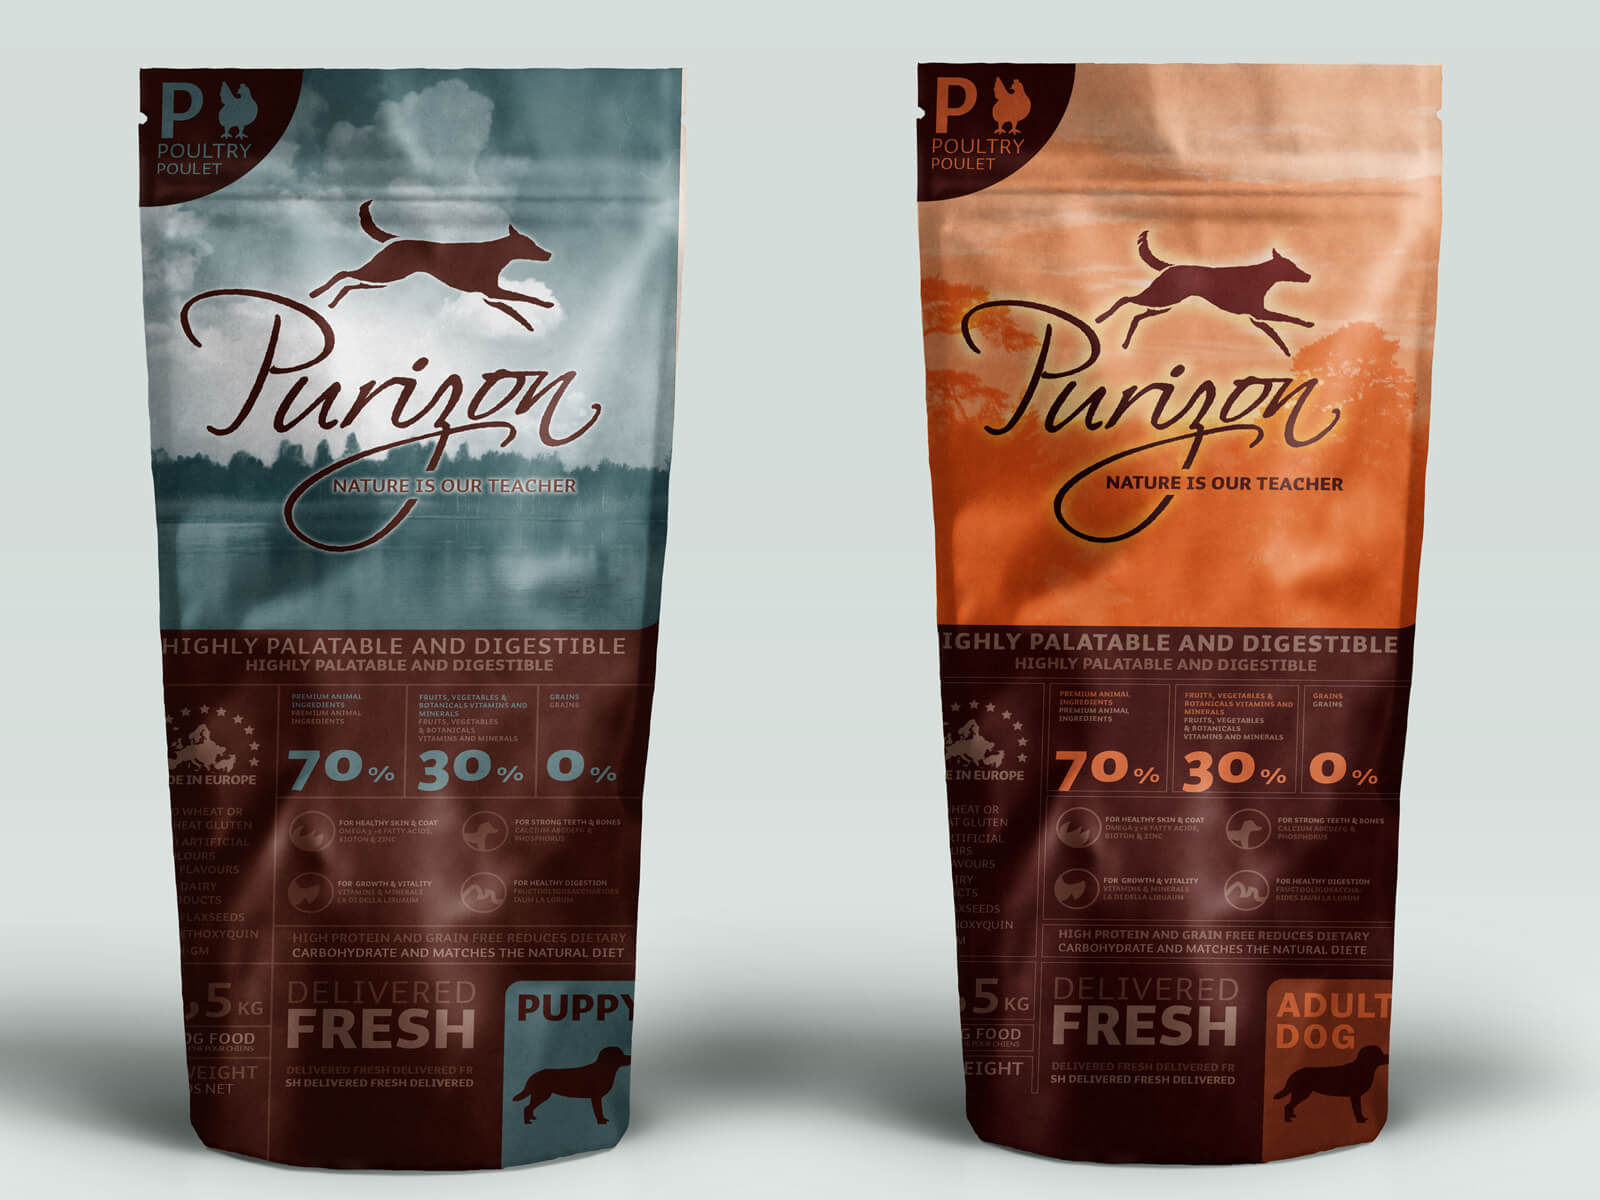 Idee Purizon Packaging nokidesign